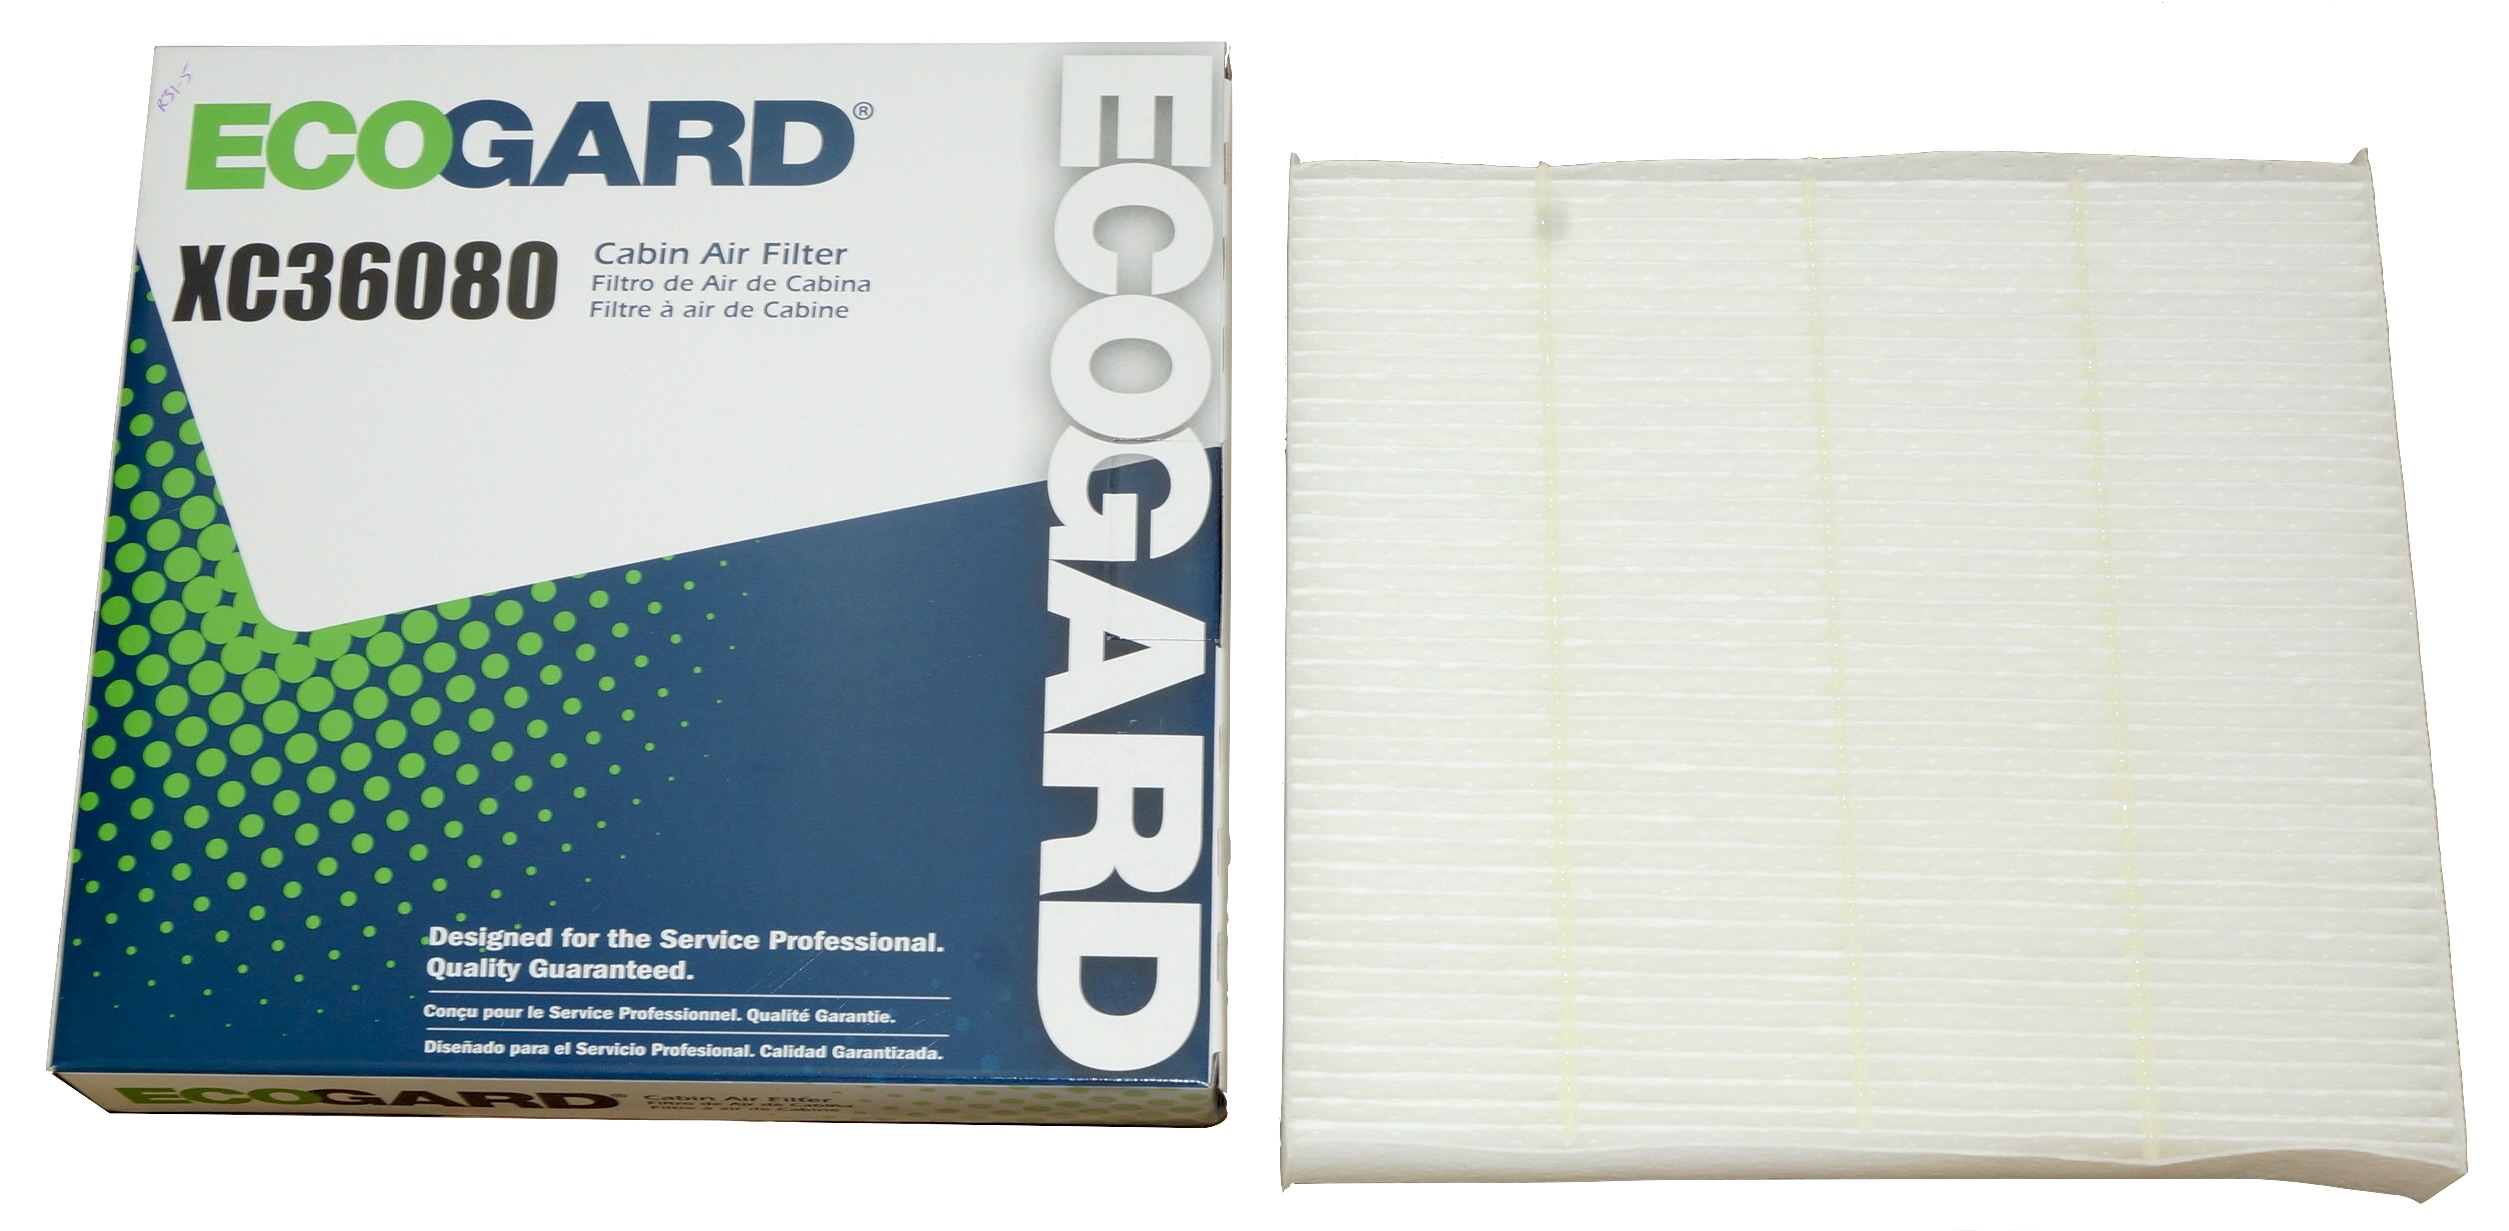 Ecogard XC36080 Cabin Air Filter, Passenger Compartment Air